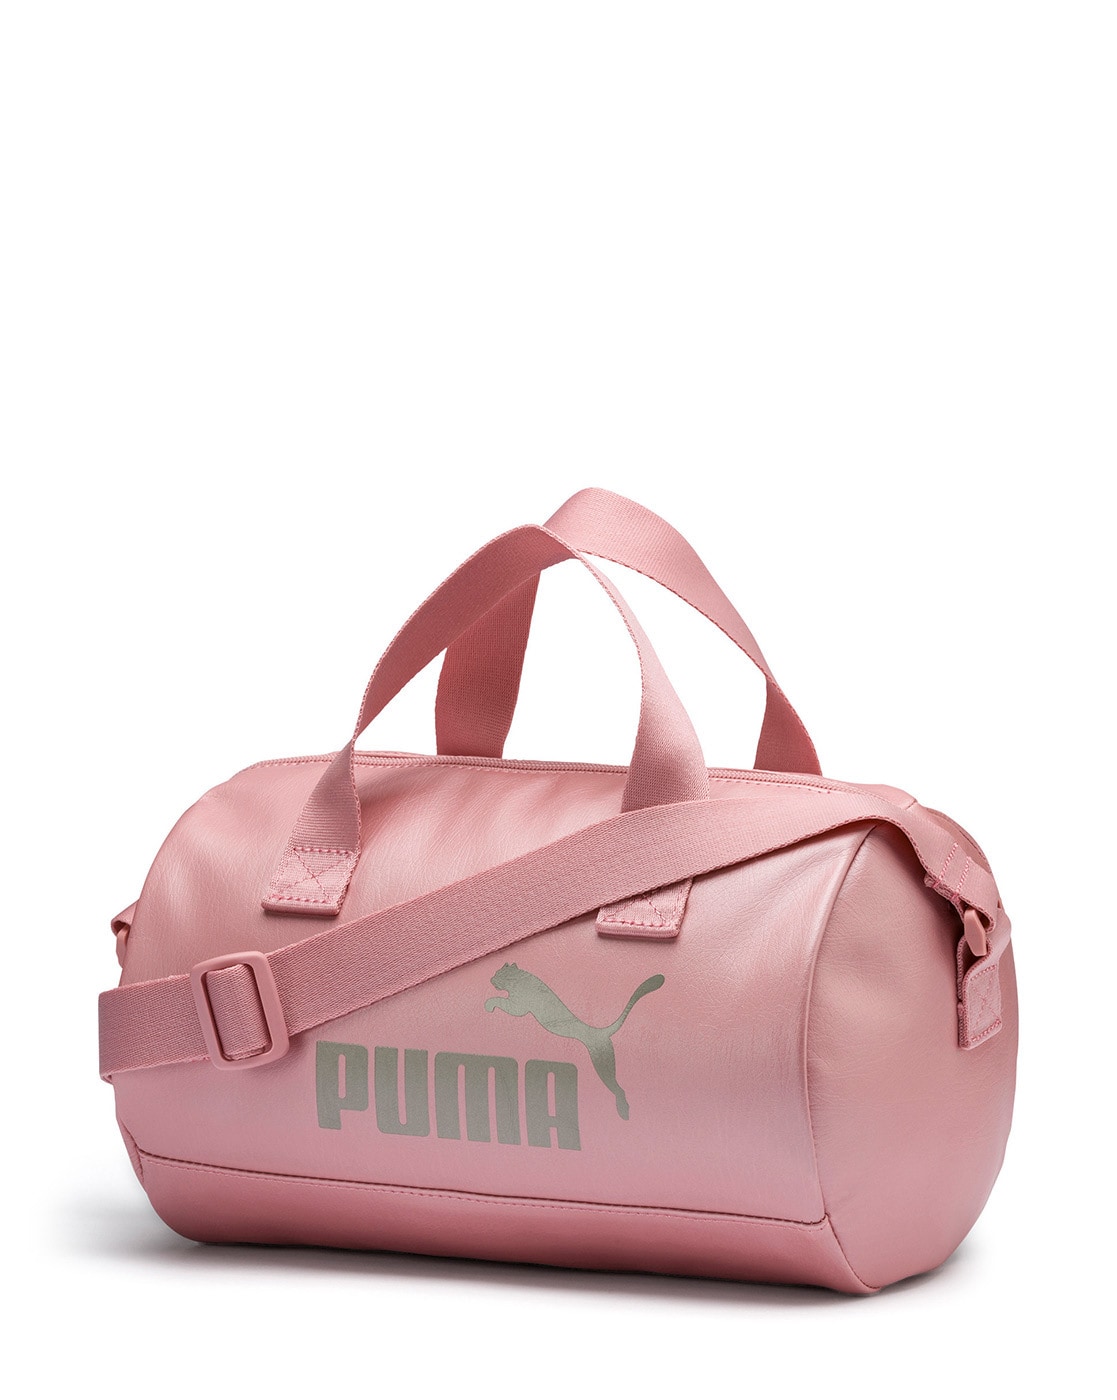 Details 79+ puma gym bag women's latest - in.cdgdbentre